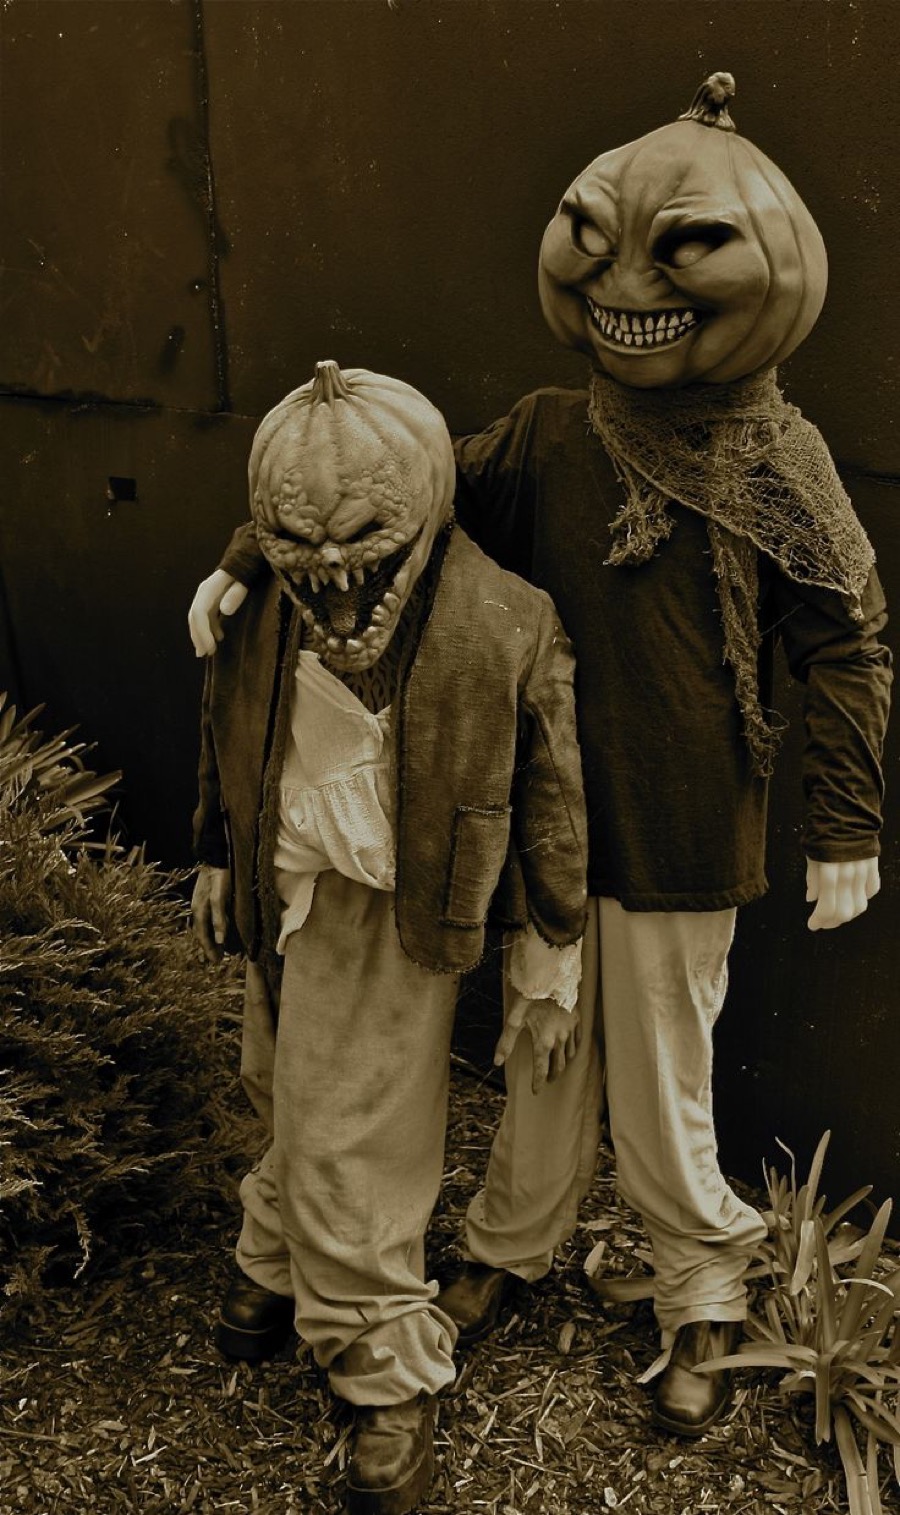 Vintage Halloween costumns were quite interesting... Some 100 yeats old!